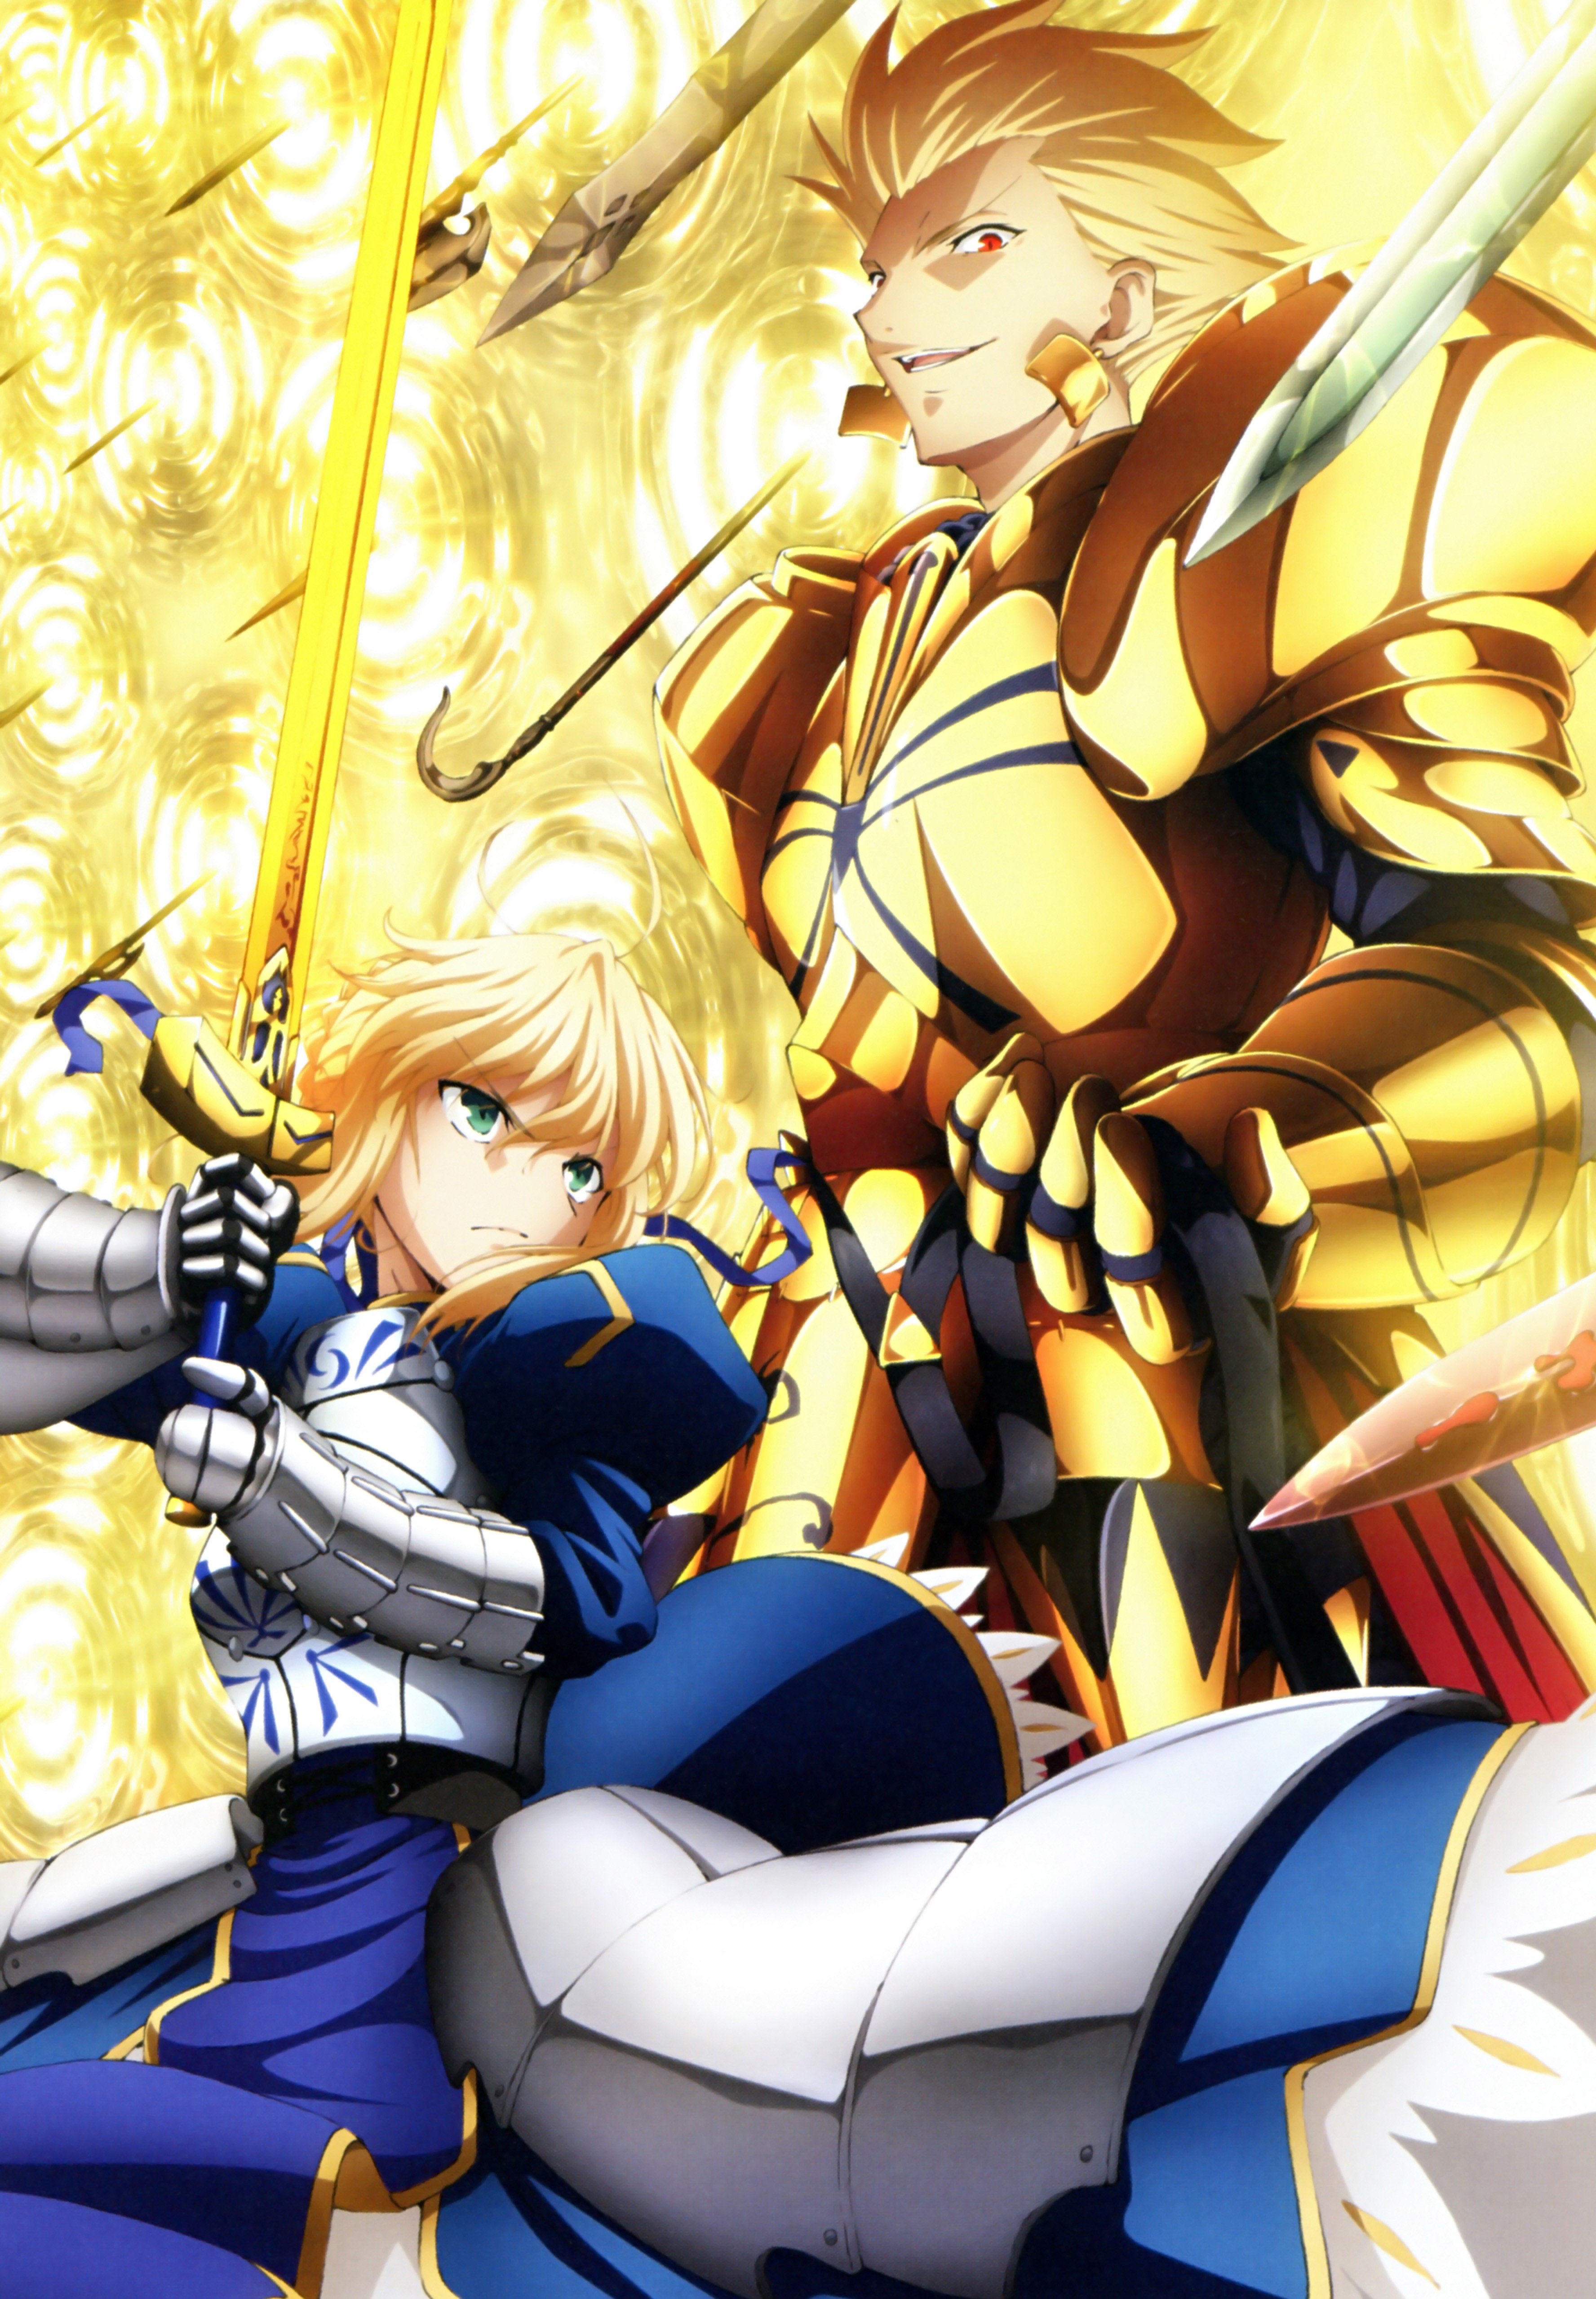 Gilgamesh anime Saber FateZero Fate series wallpaper 3552x5116 3552x5116